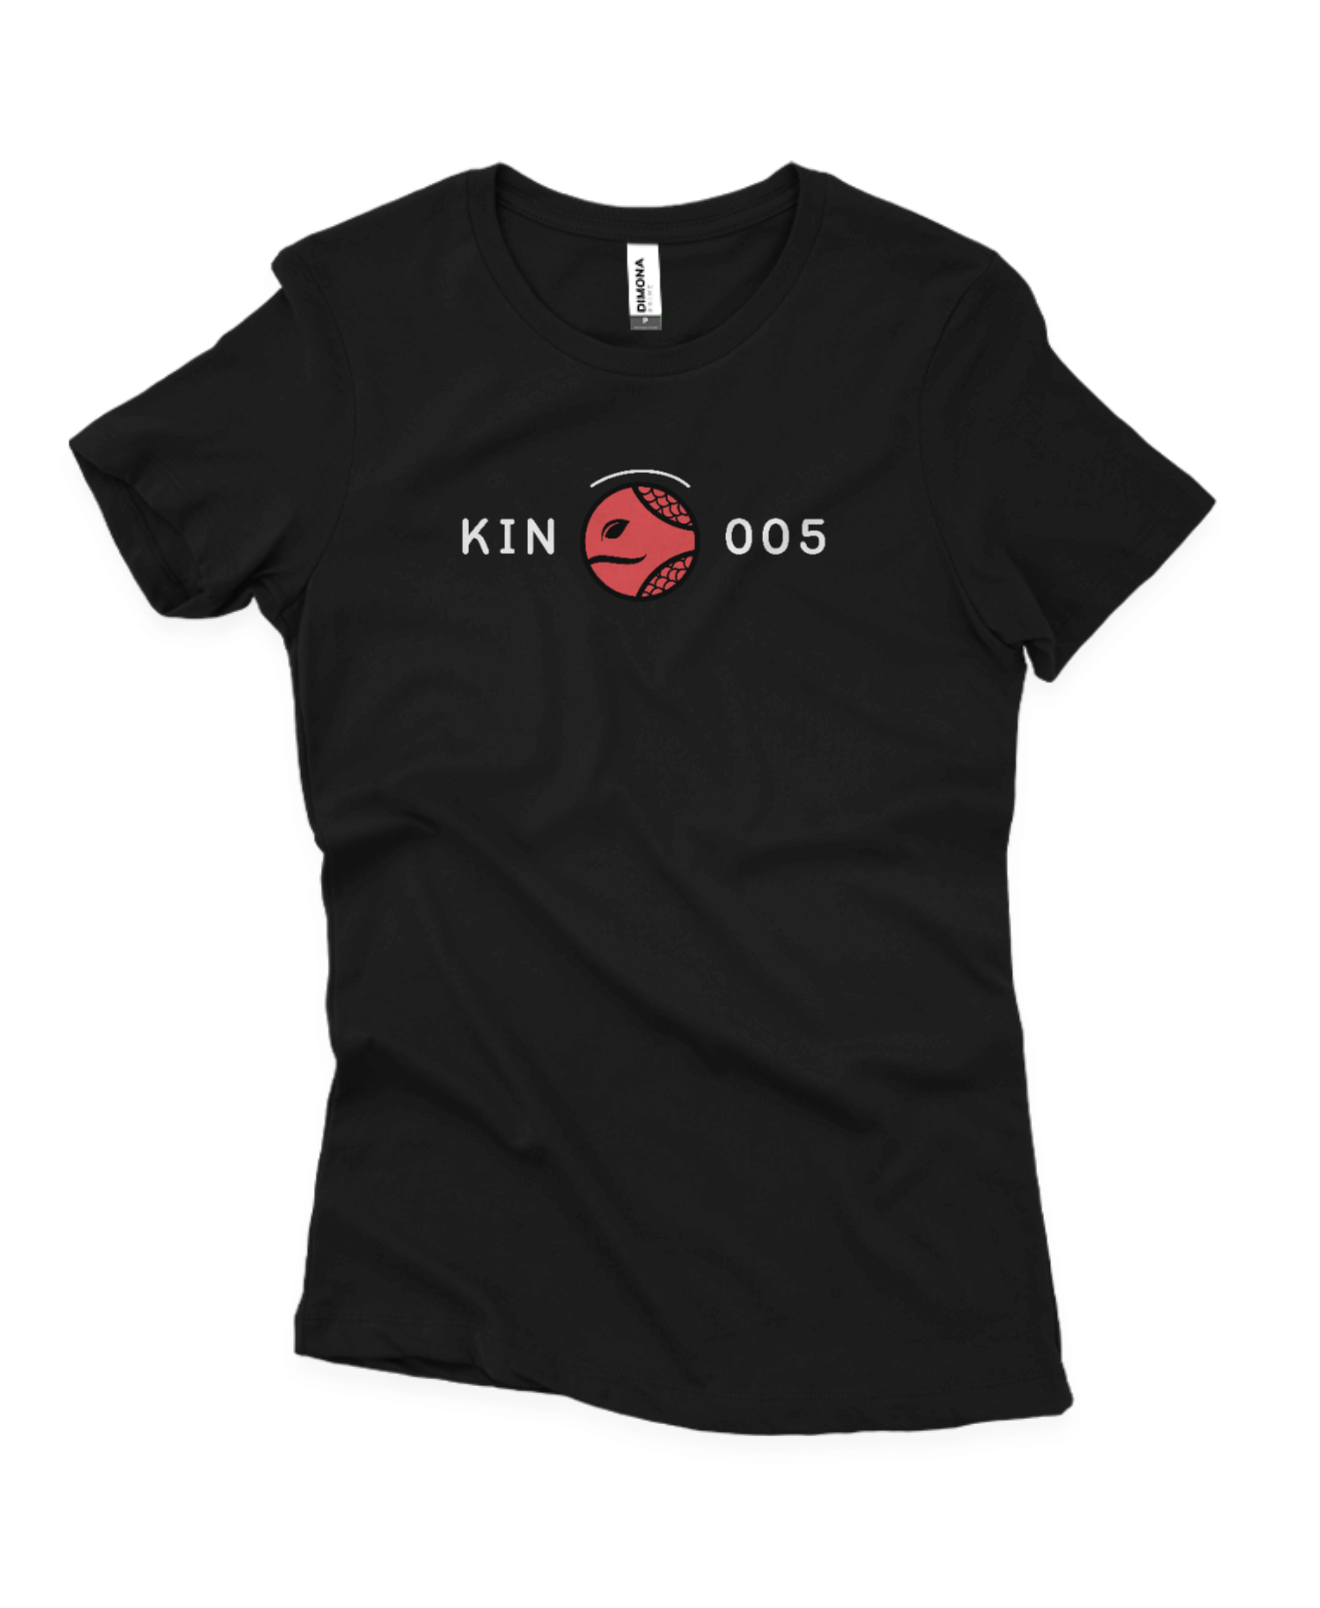 Mockup Camisa Preta - Camisa Feminina Kin 005 - Serpente Harmônica Vermelha - Kin 5 - Kin 05